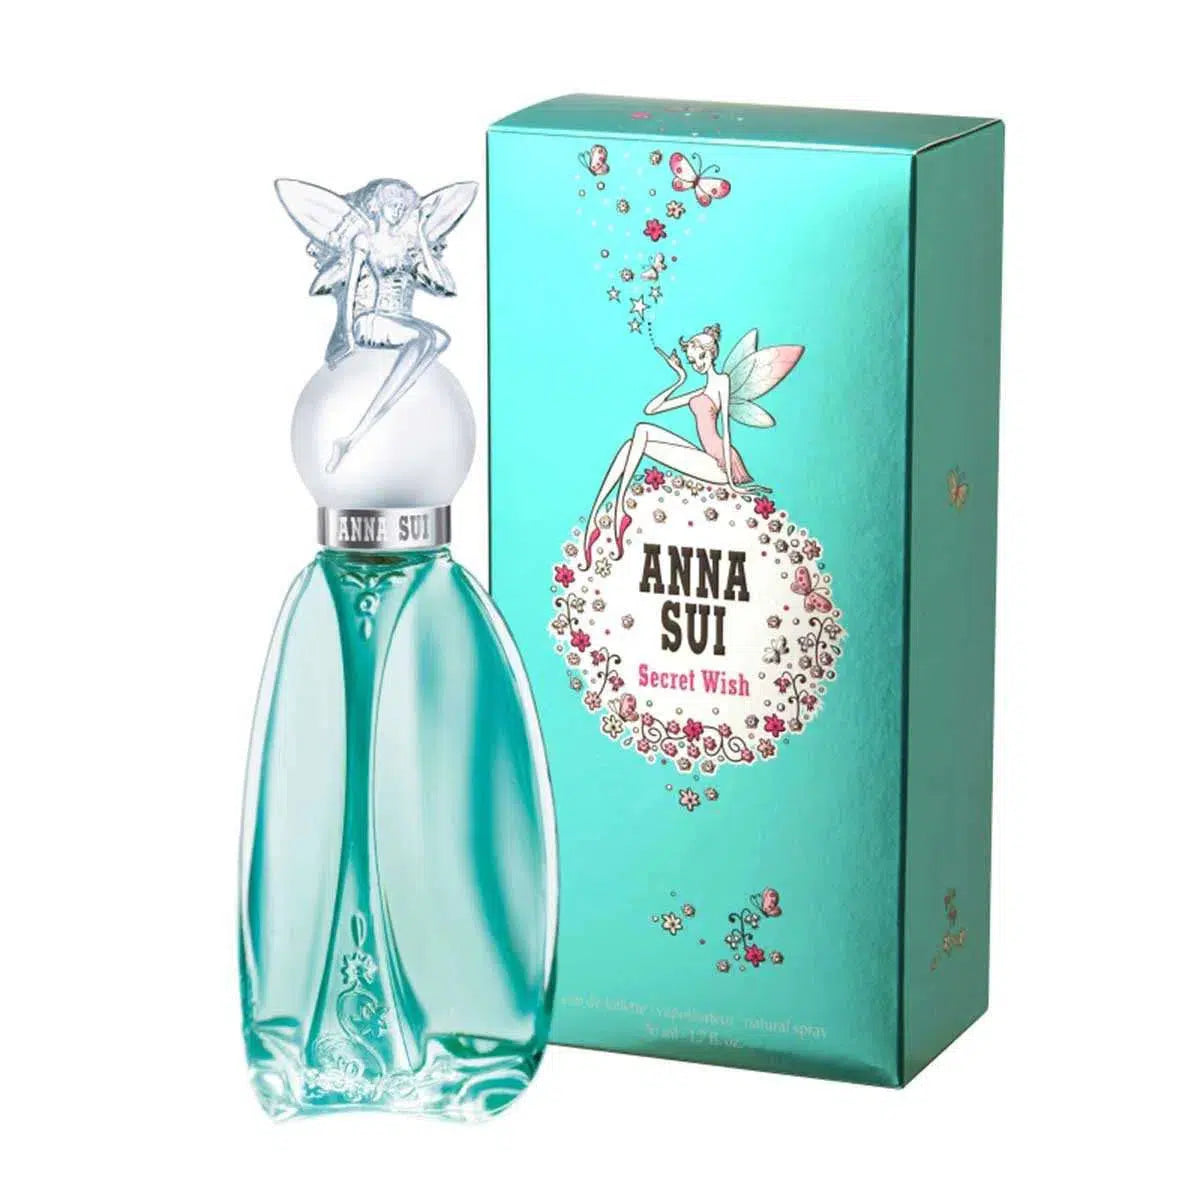 Anna Sui Secret Wish 75ml - Perfume Philippines